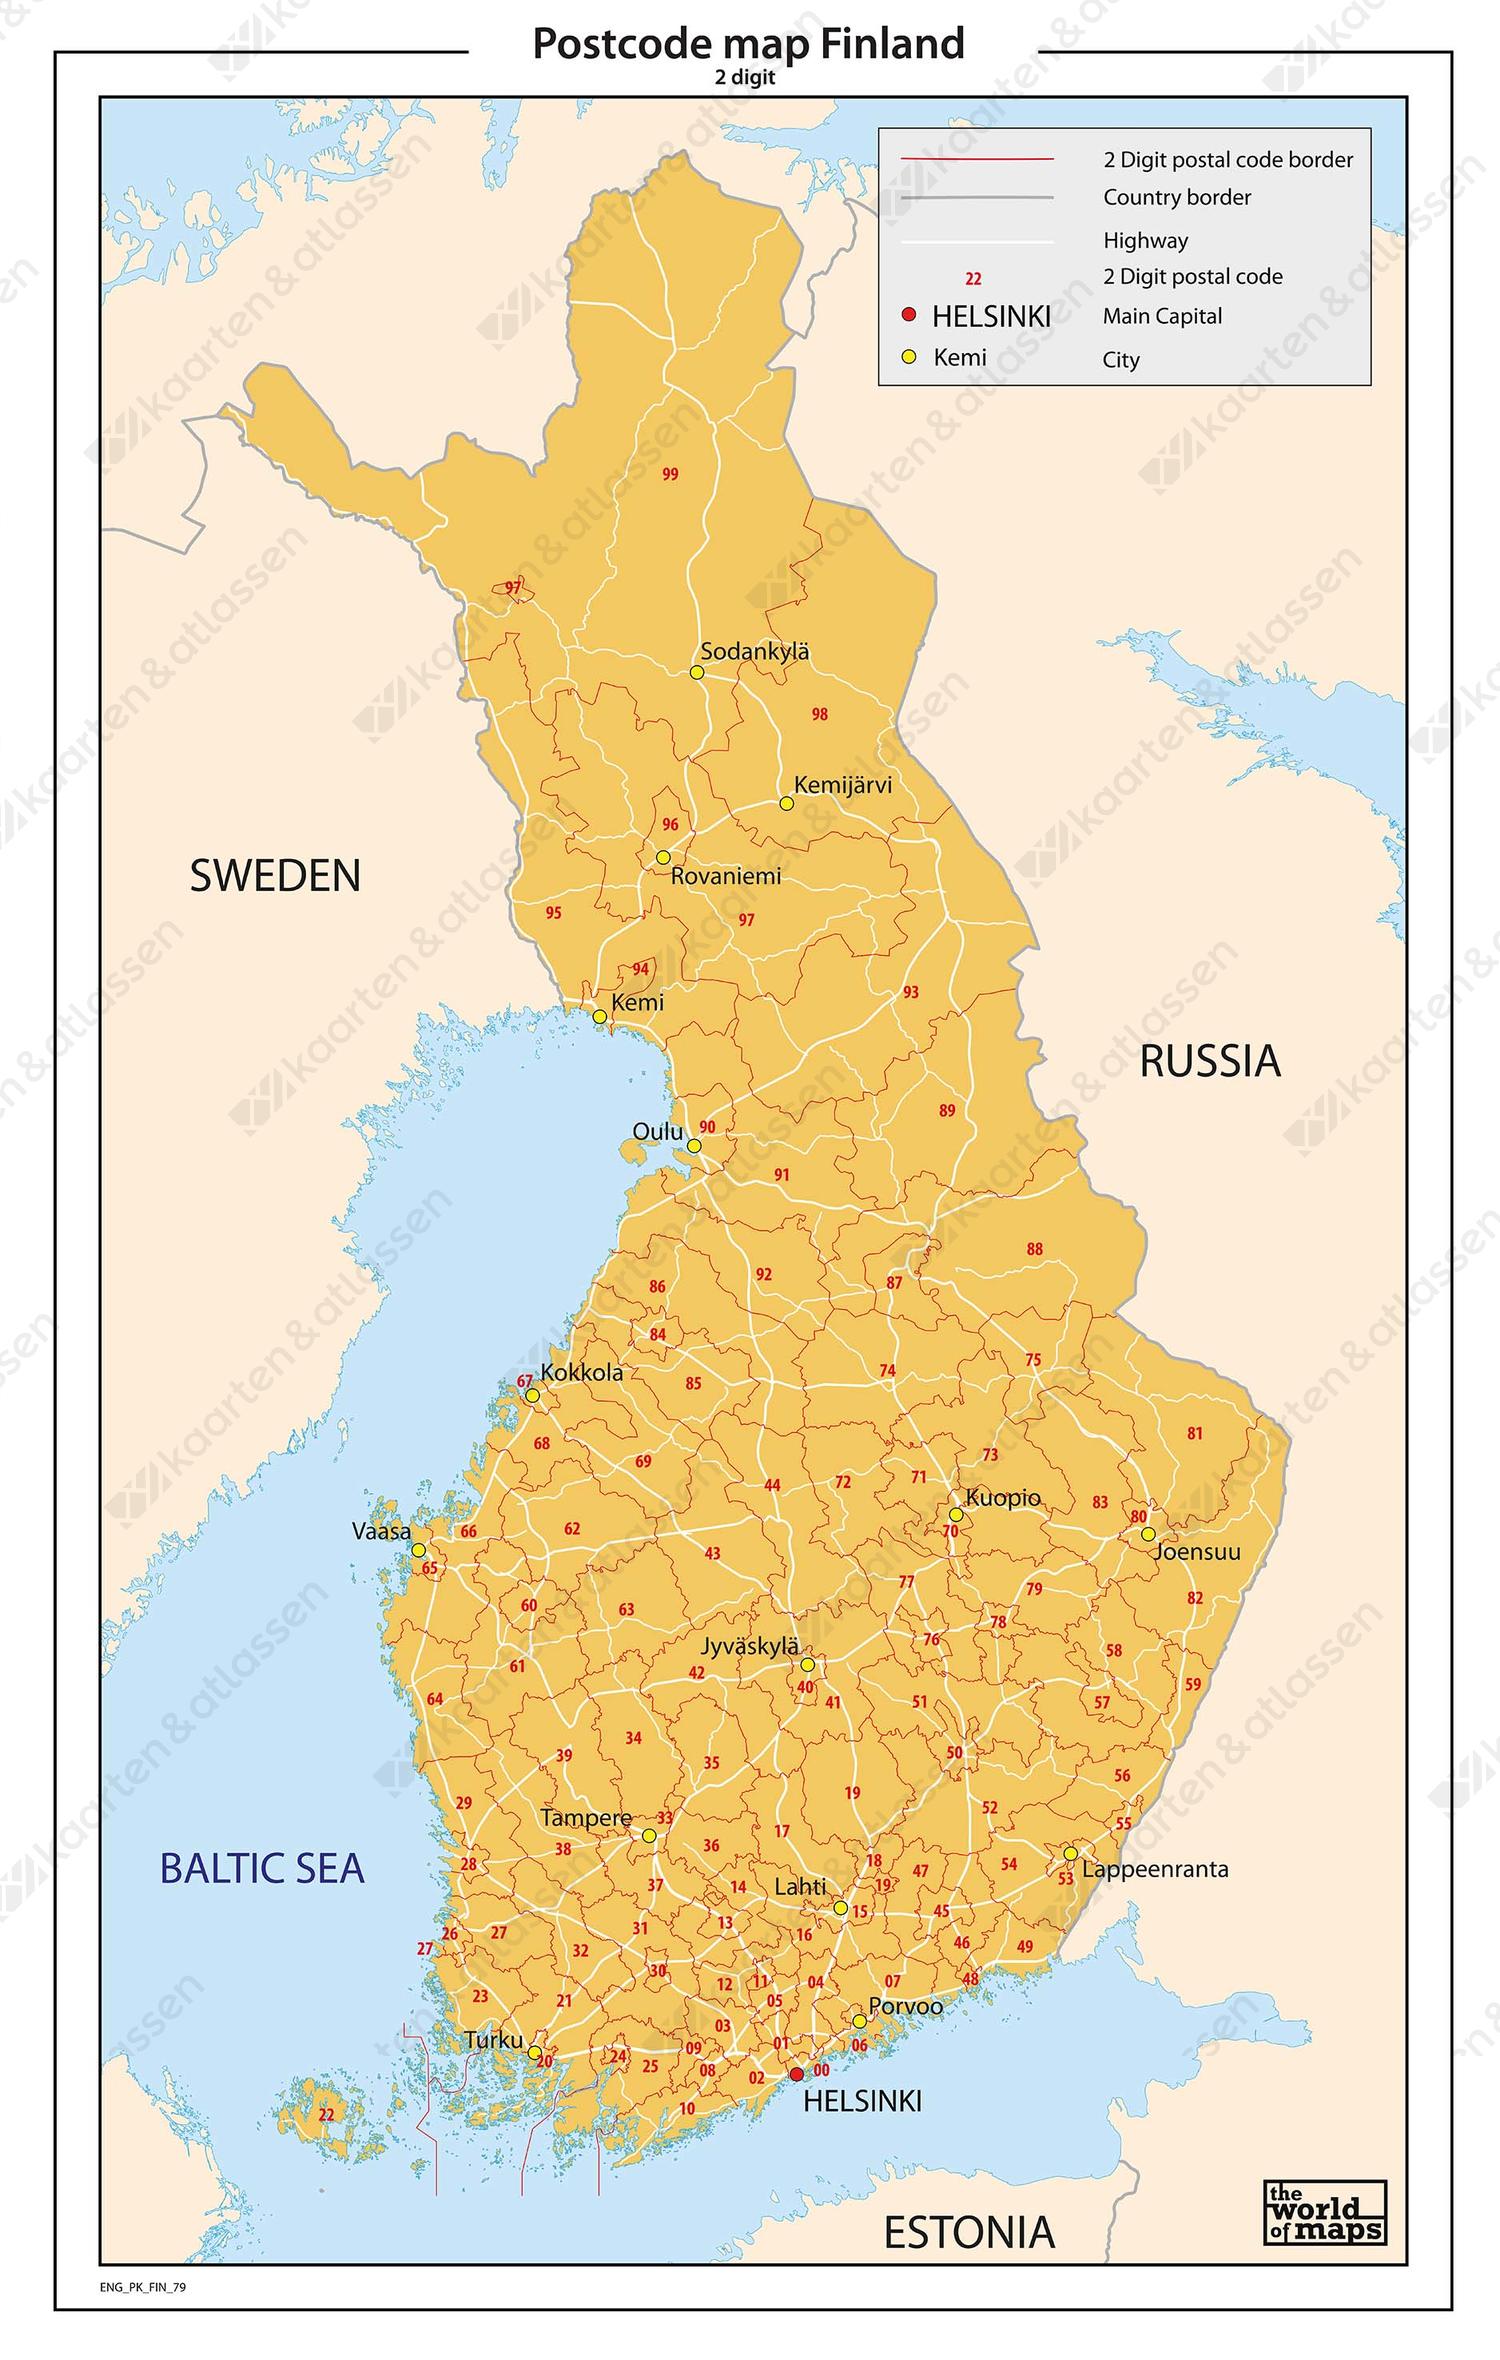 Finland 2-cijferige postcodekaart